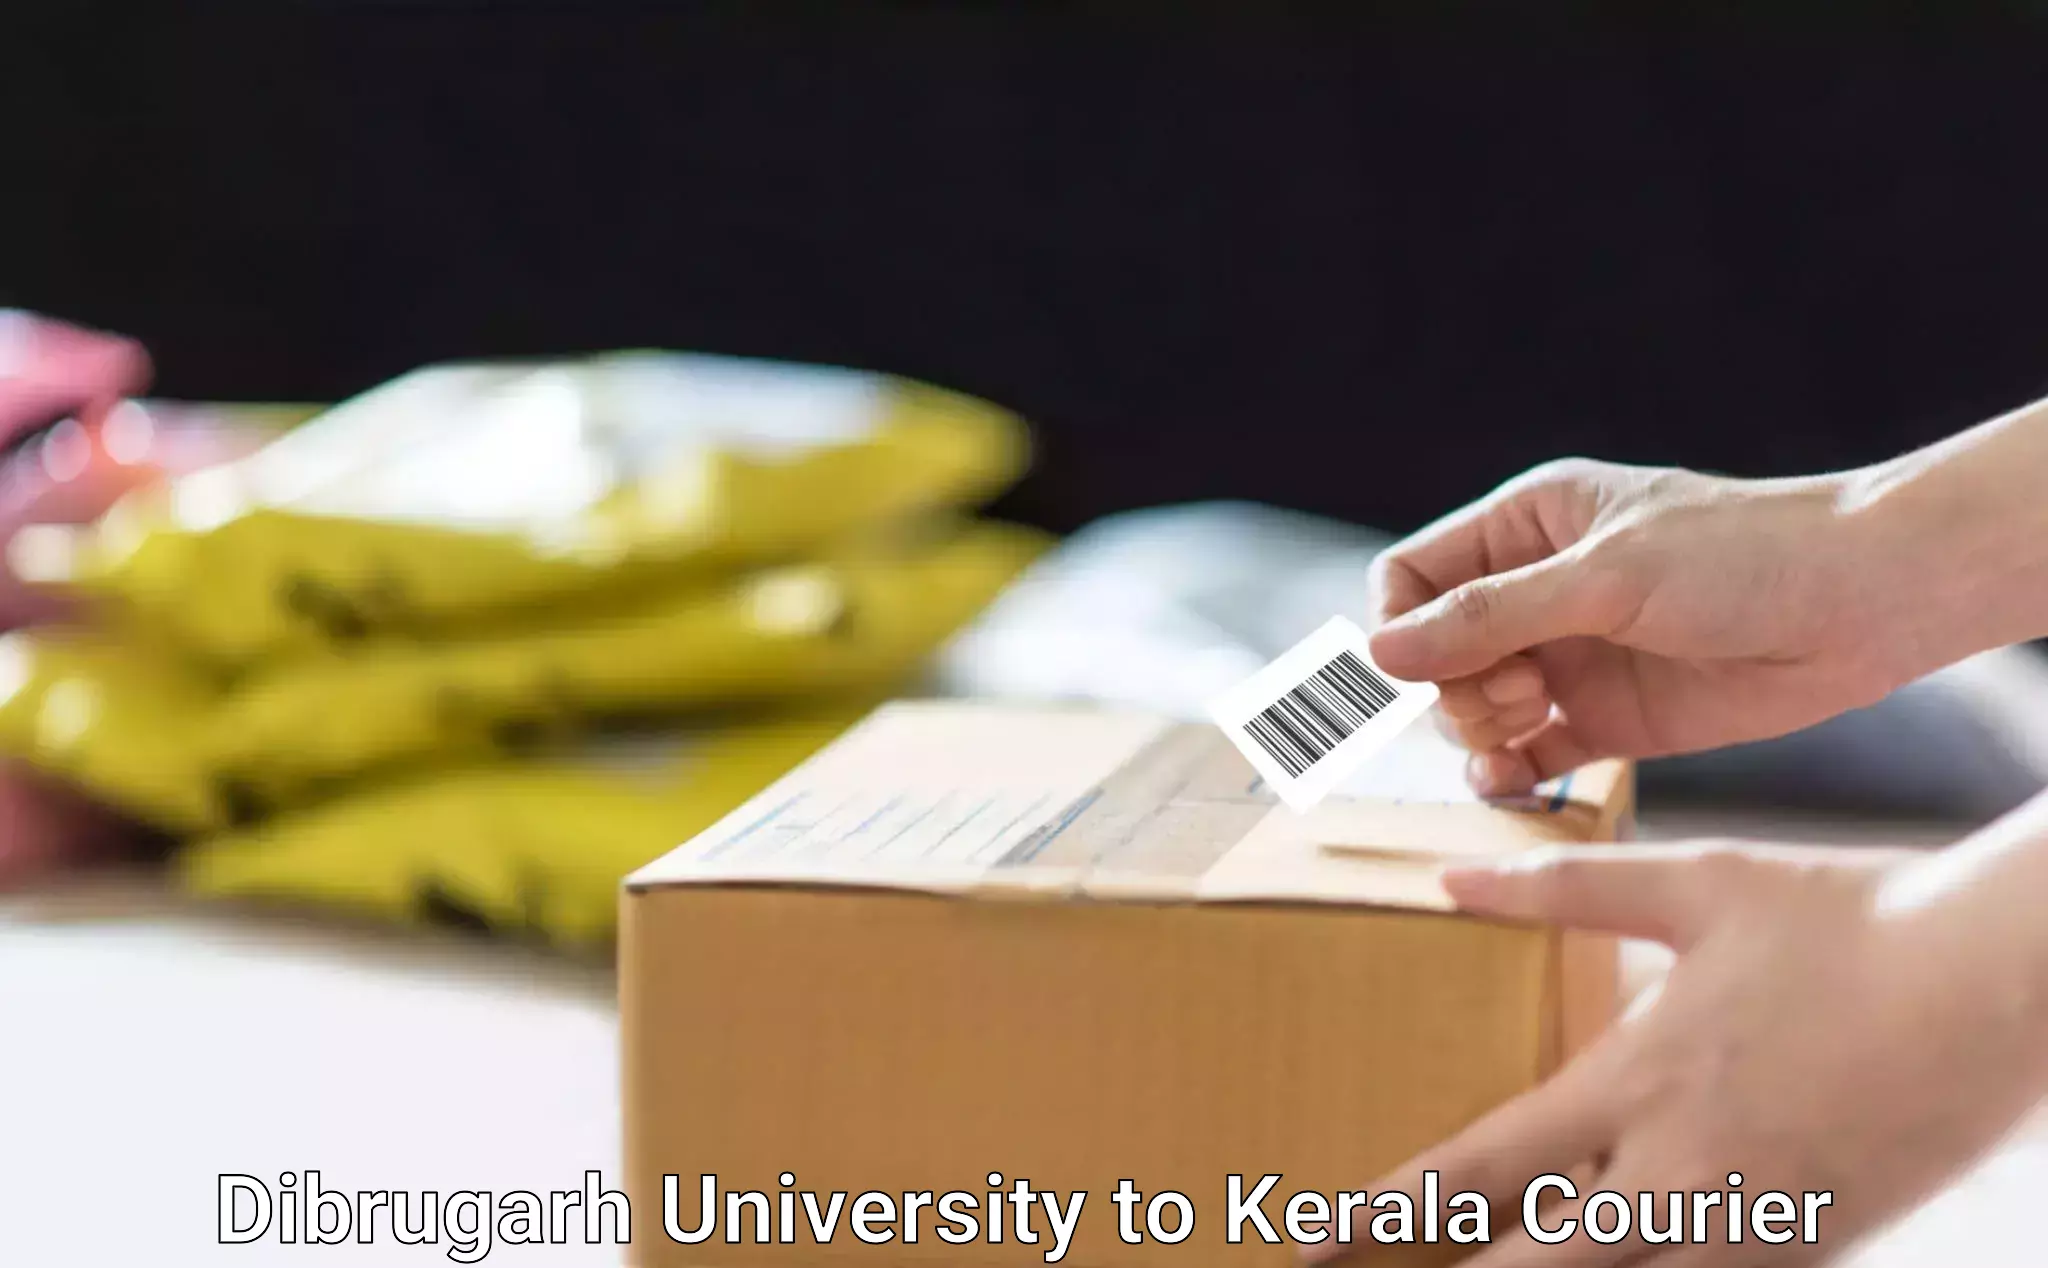 Budget-friendly shipping Dibrugarh University to Cochin Port Kochi